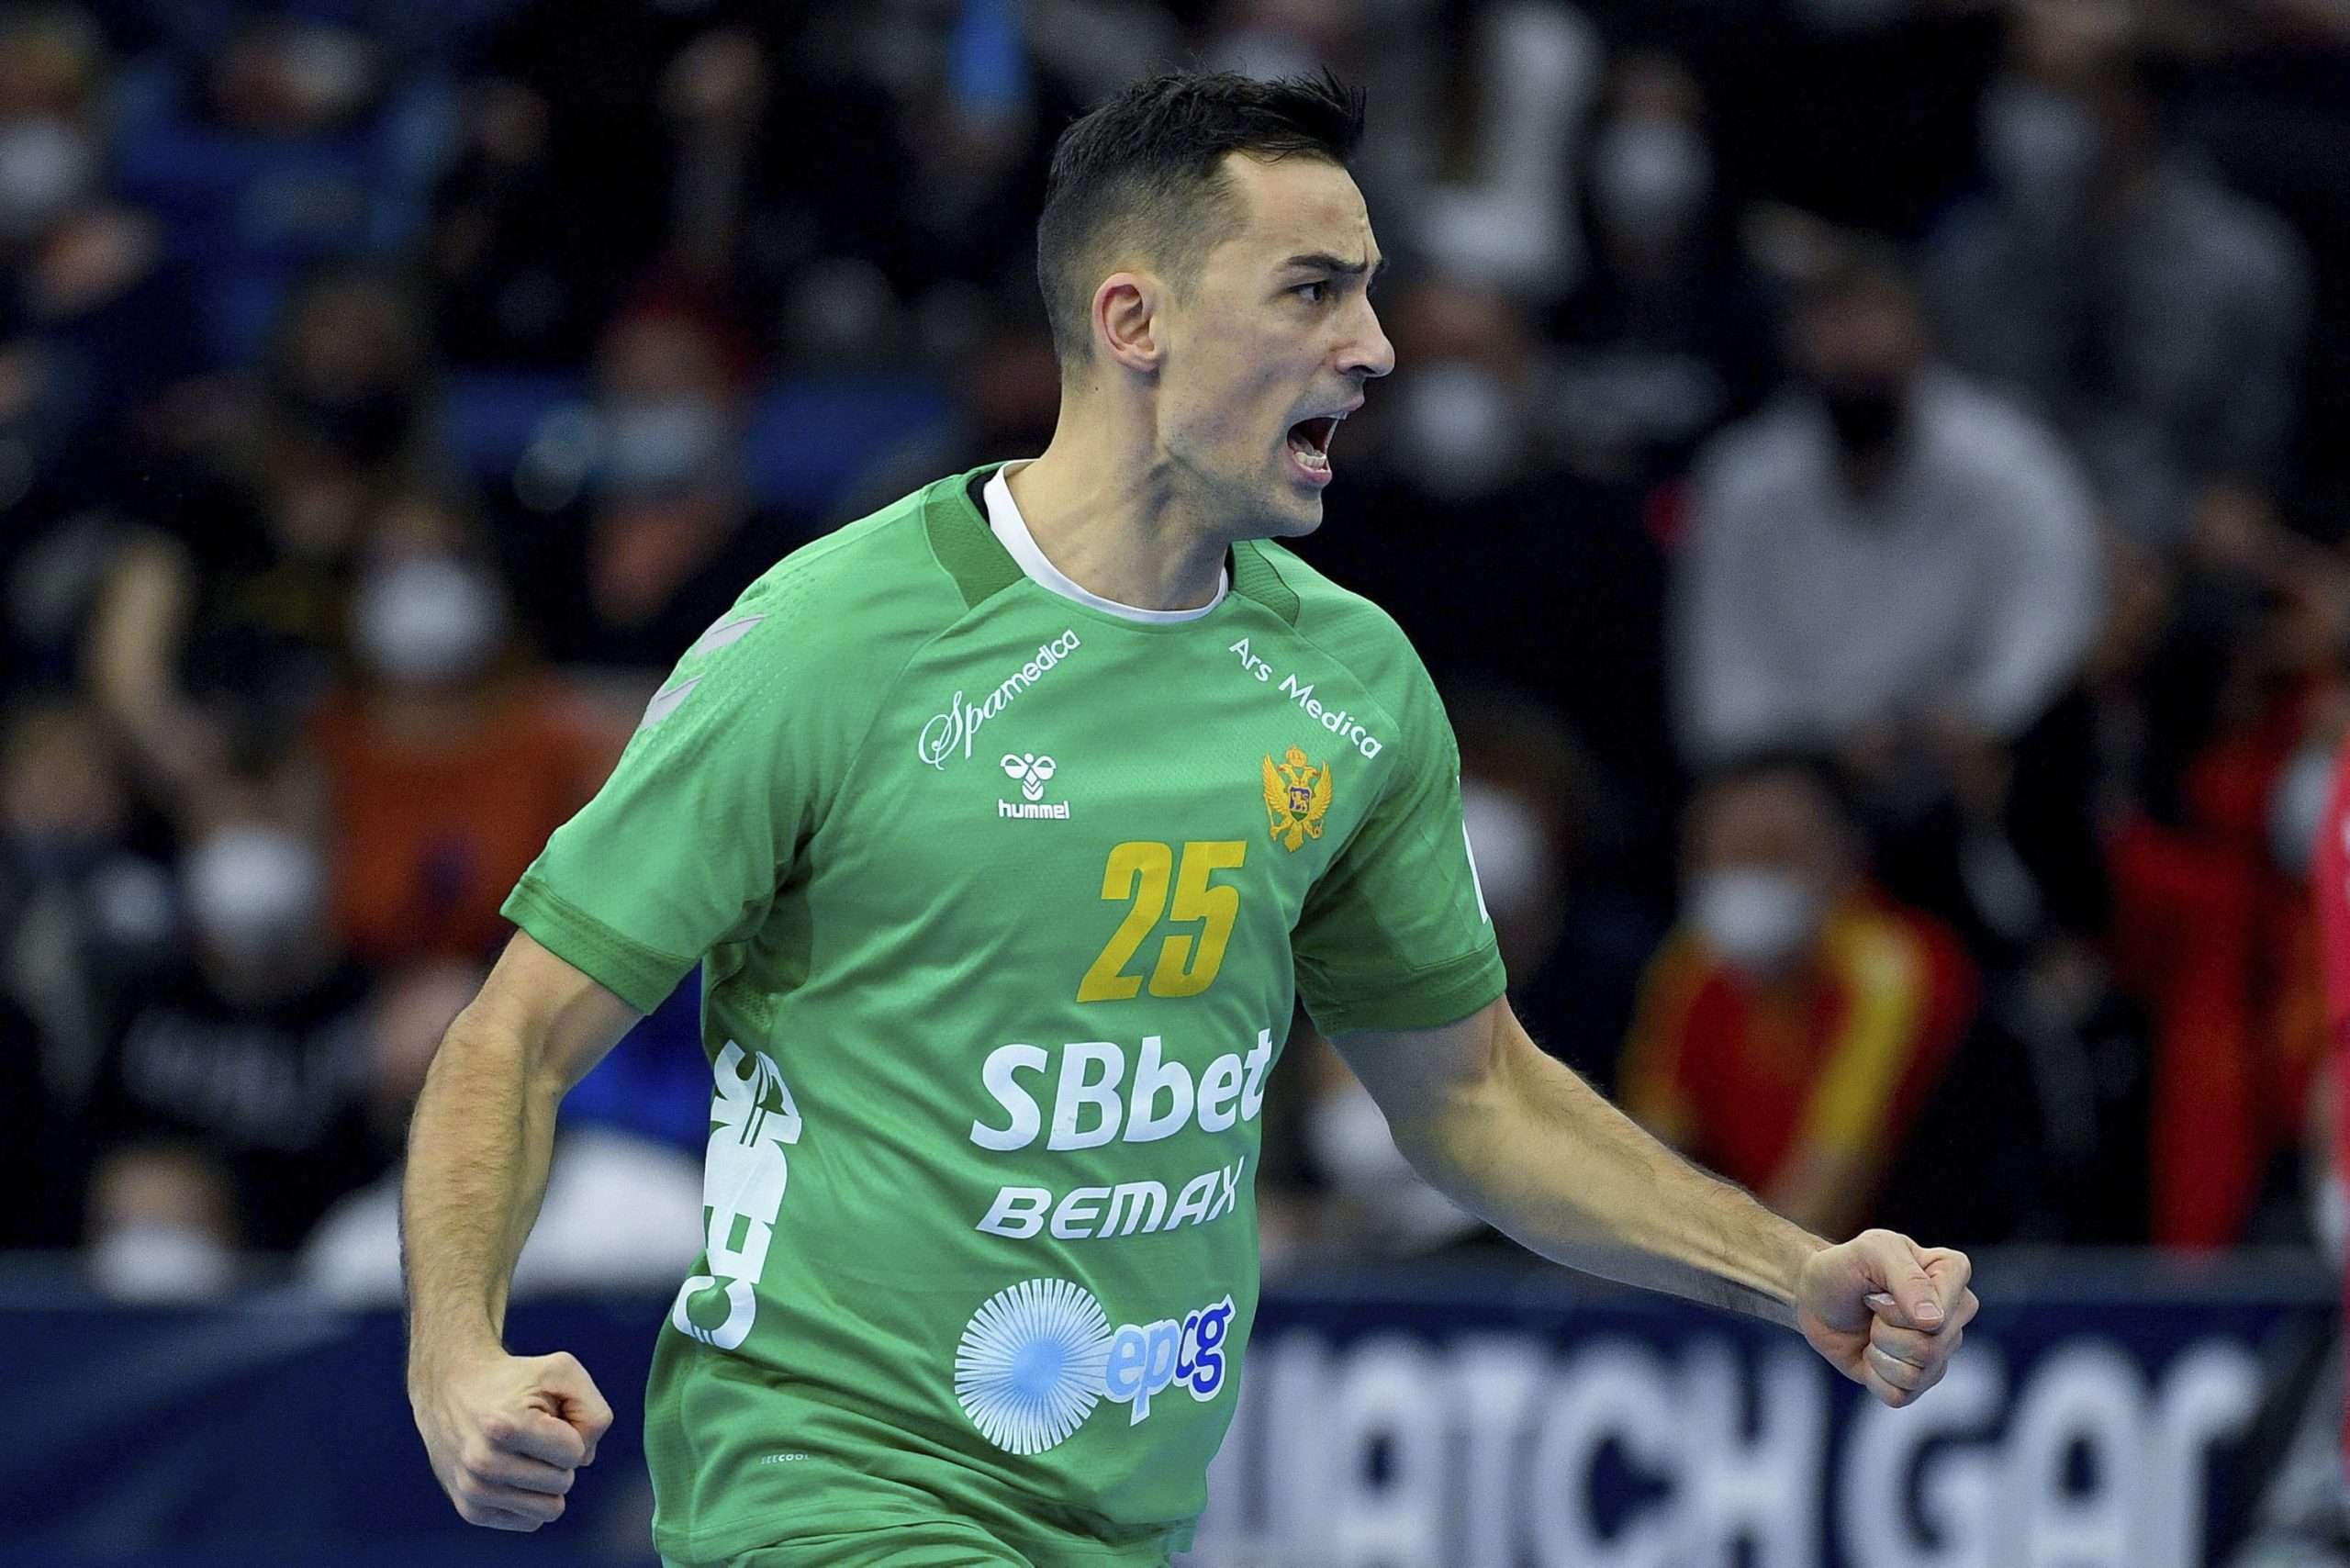 Montenegros Marko Lasica hat bei der Handball-EM einen Fan bespuckt.